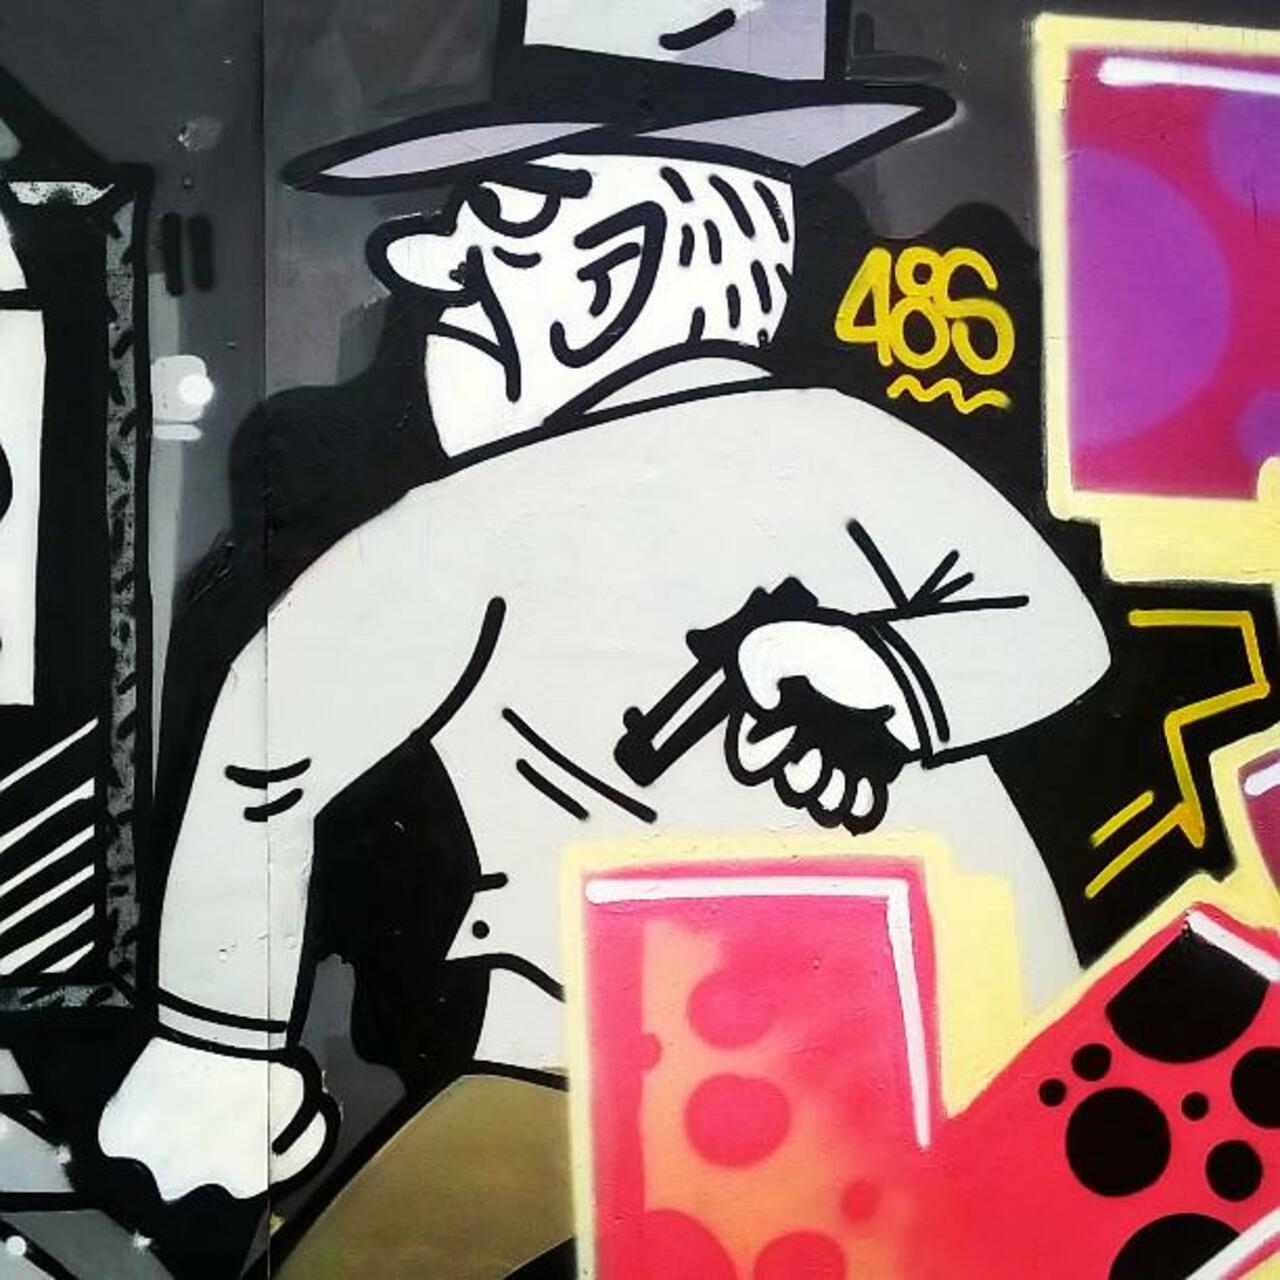 #Graffspotting #PhotoGraff #48s #gangster #trilby #graffiti #streetart #murals #street #art #digbeth #Birmingham #ci… http://t.co/YsUP52NofD